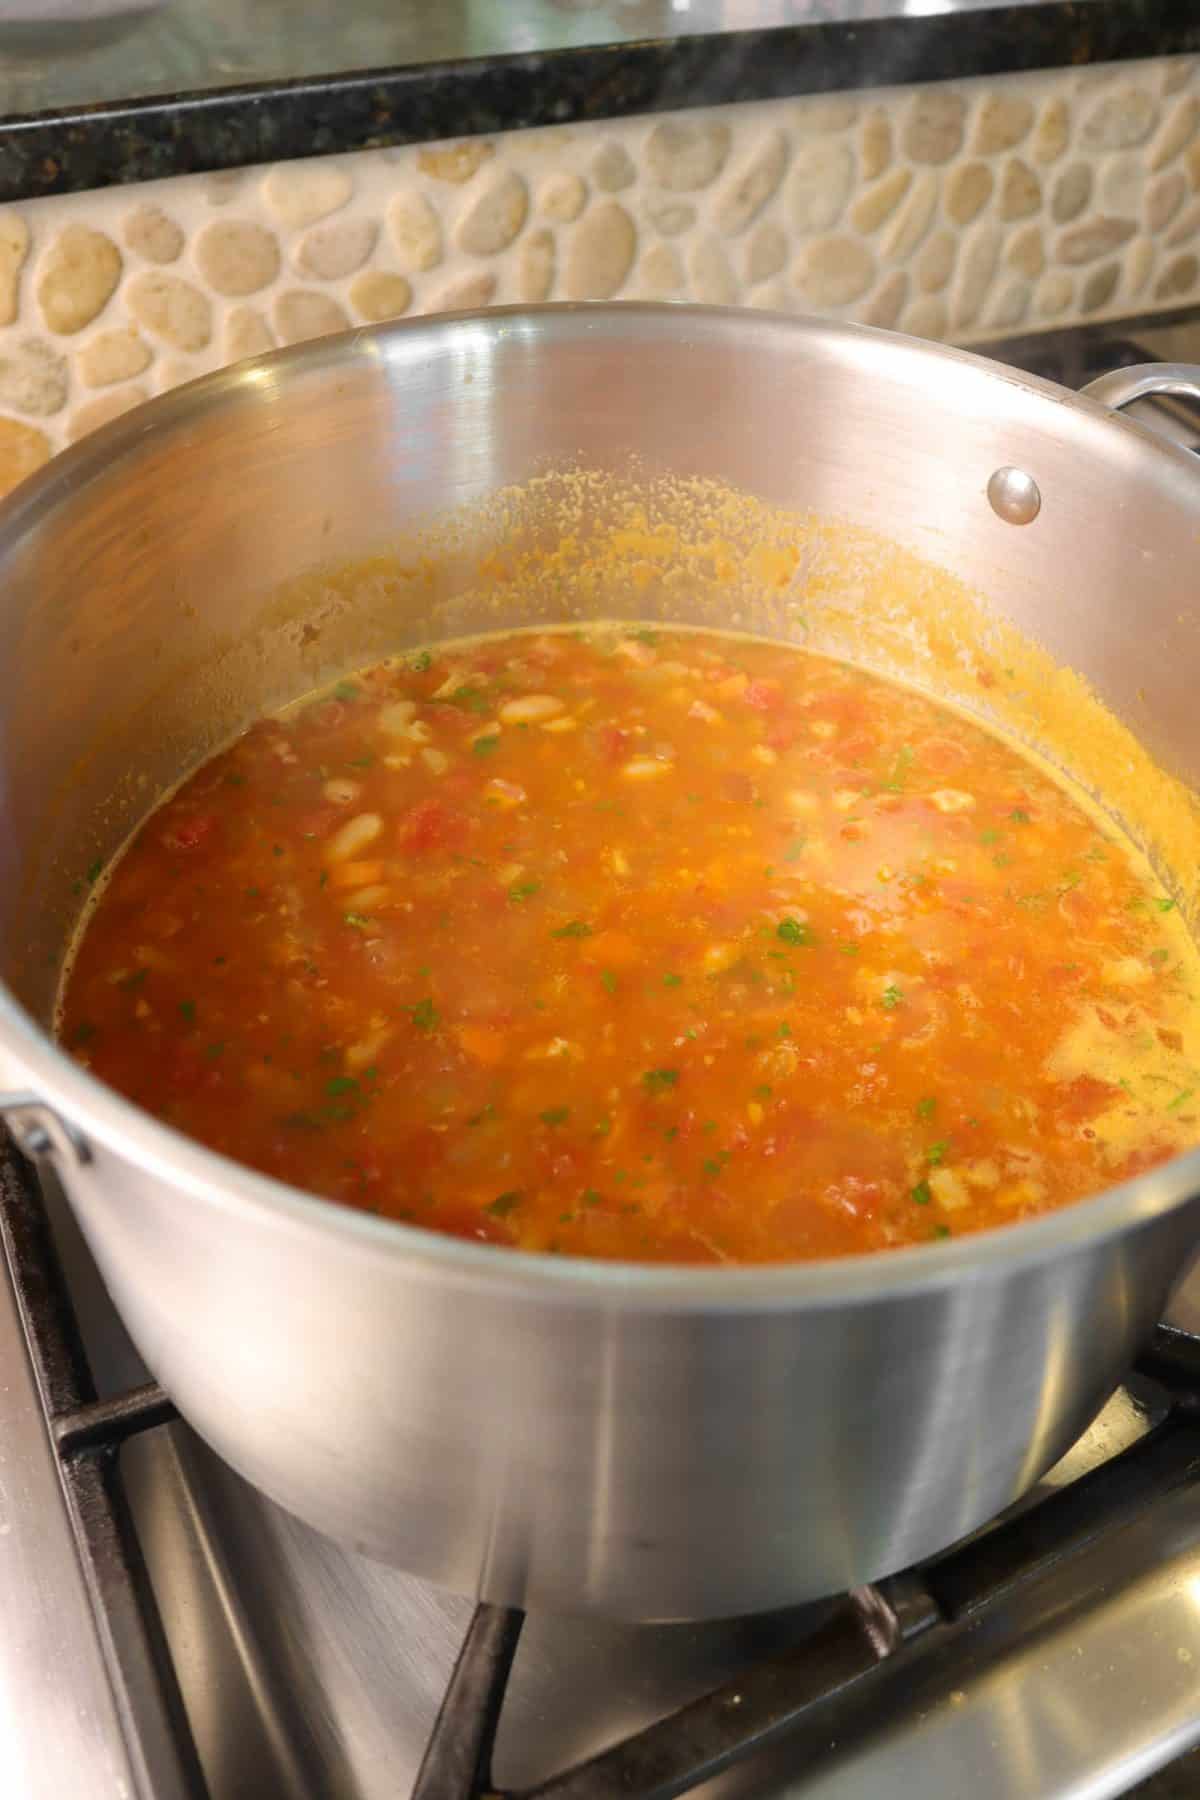 basil mixed into soup